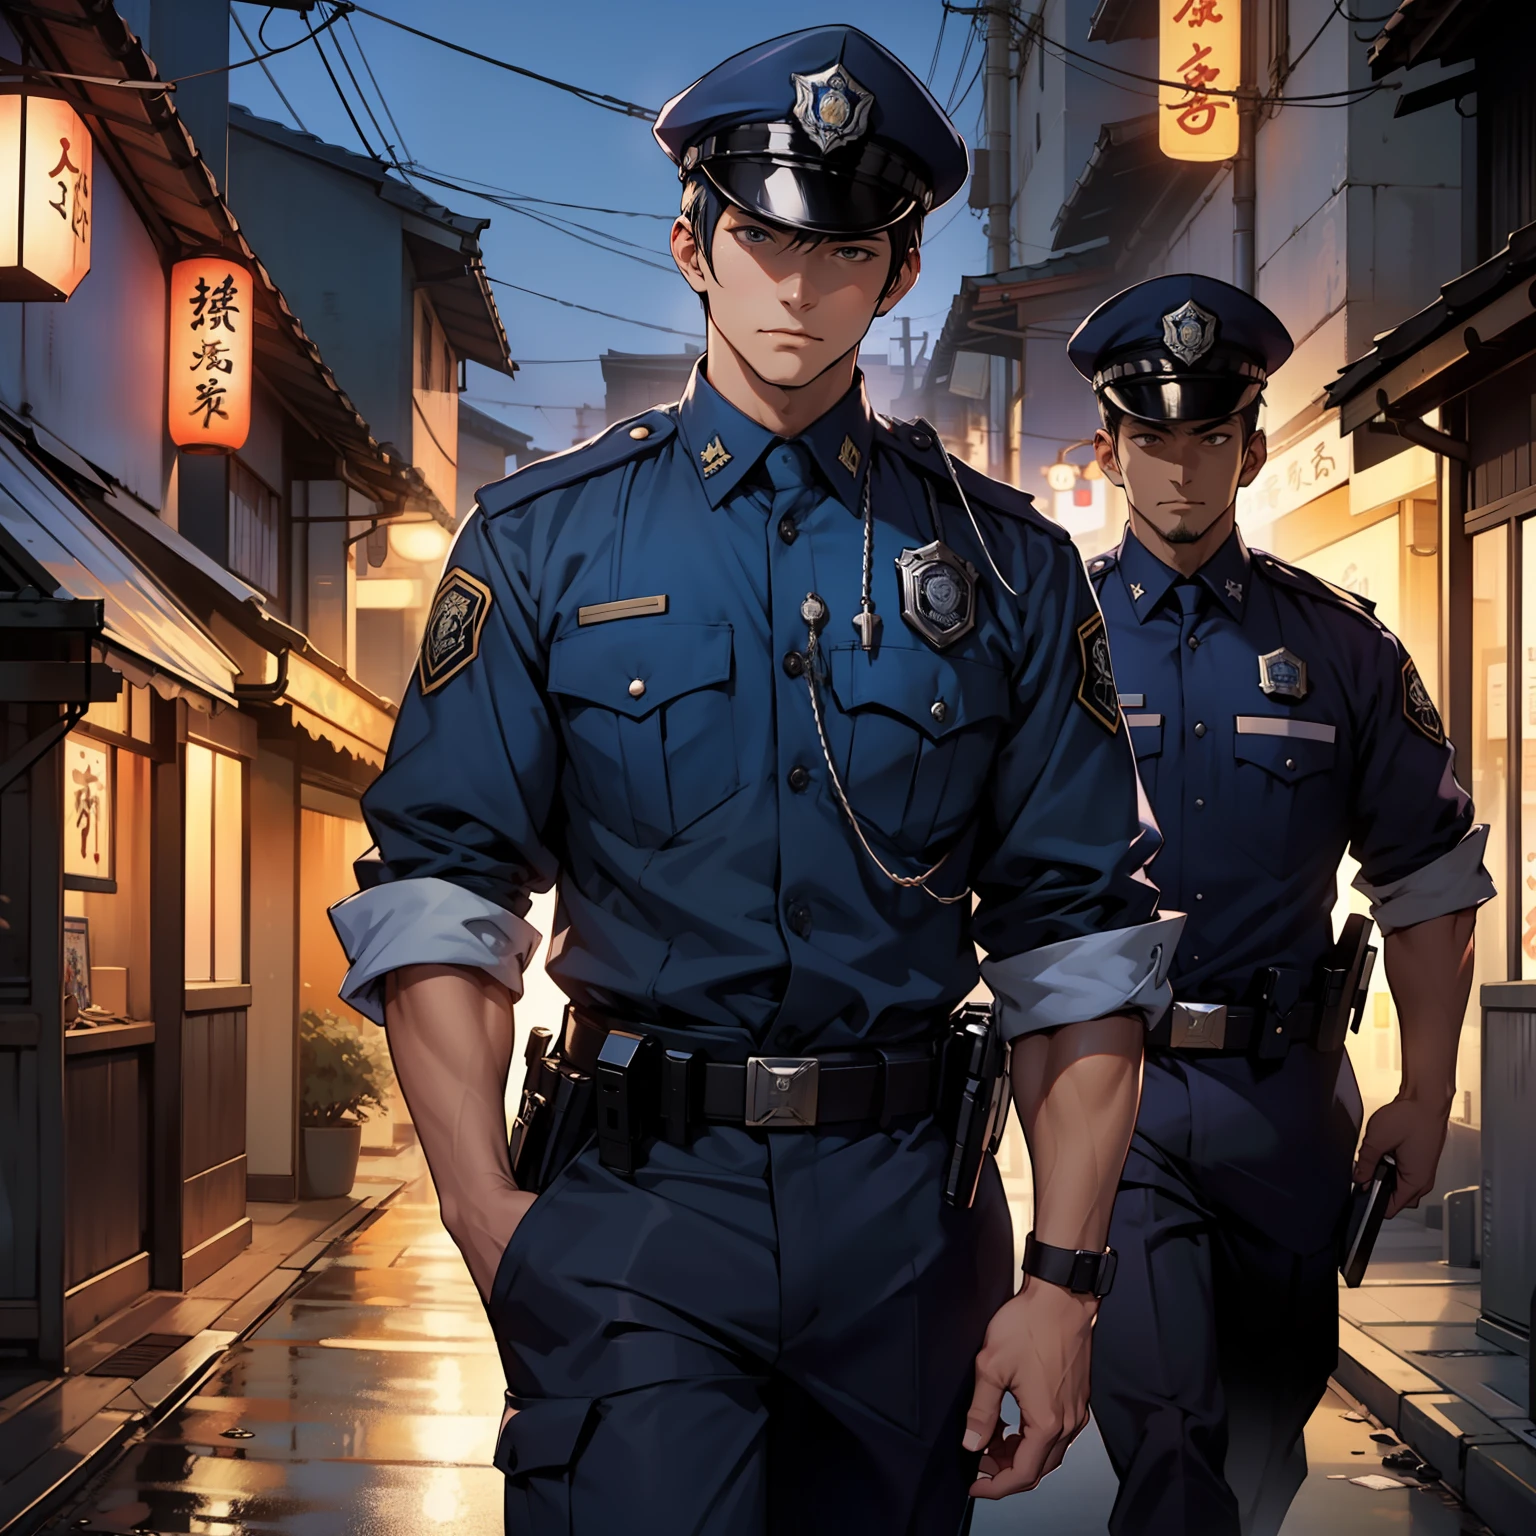 Terrible anime about cops los angles. - AI Photo Generator - starryai